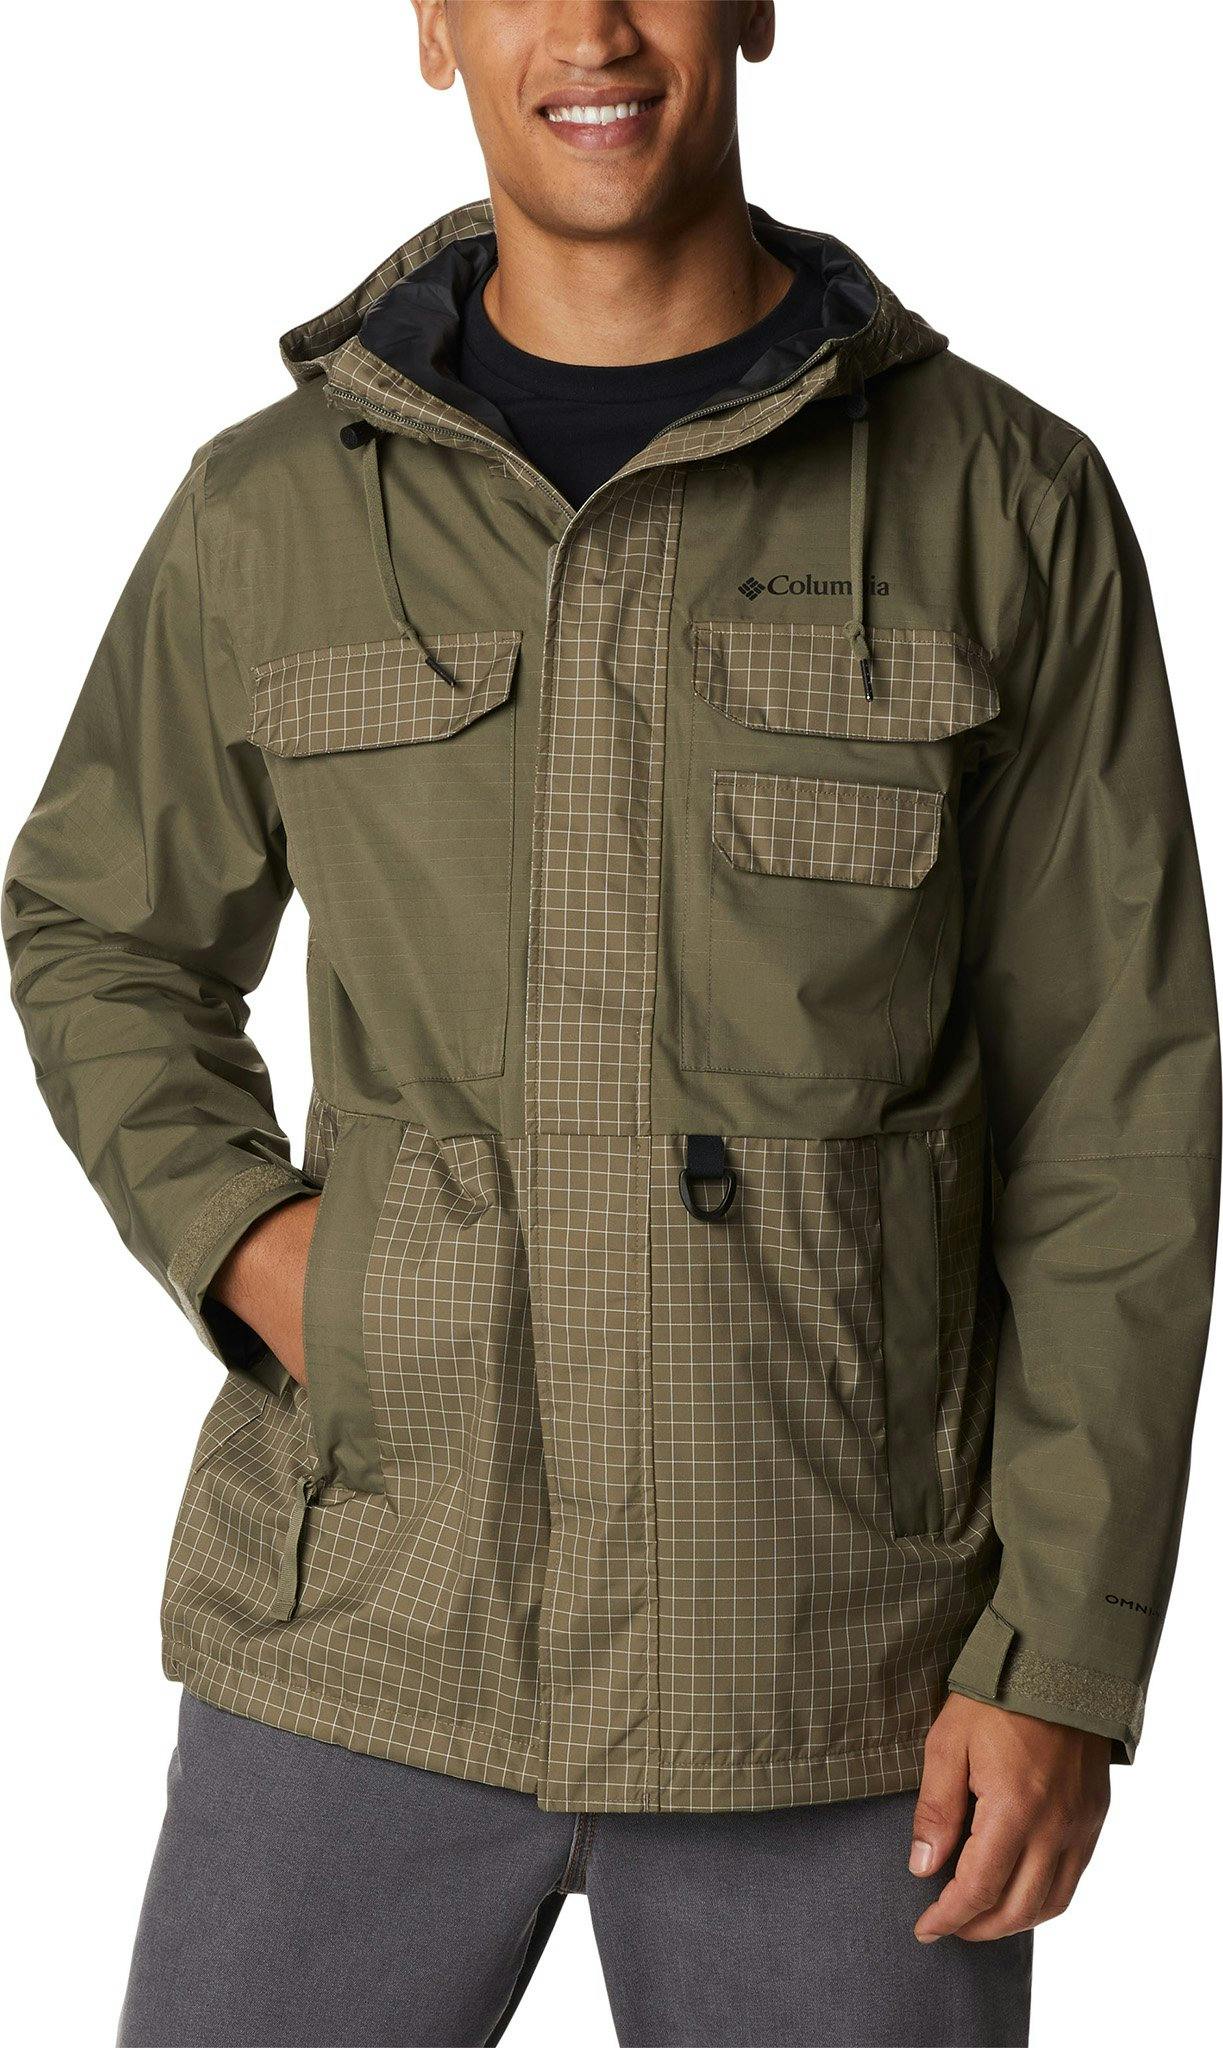 Product image for Buckhollow Jacket - Men's